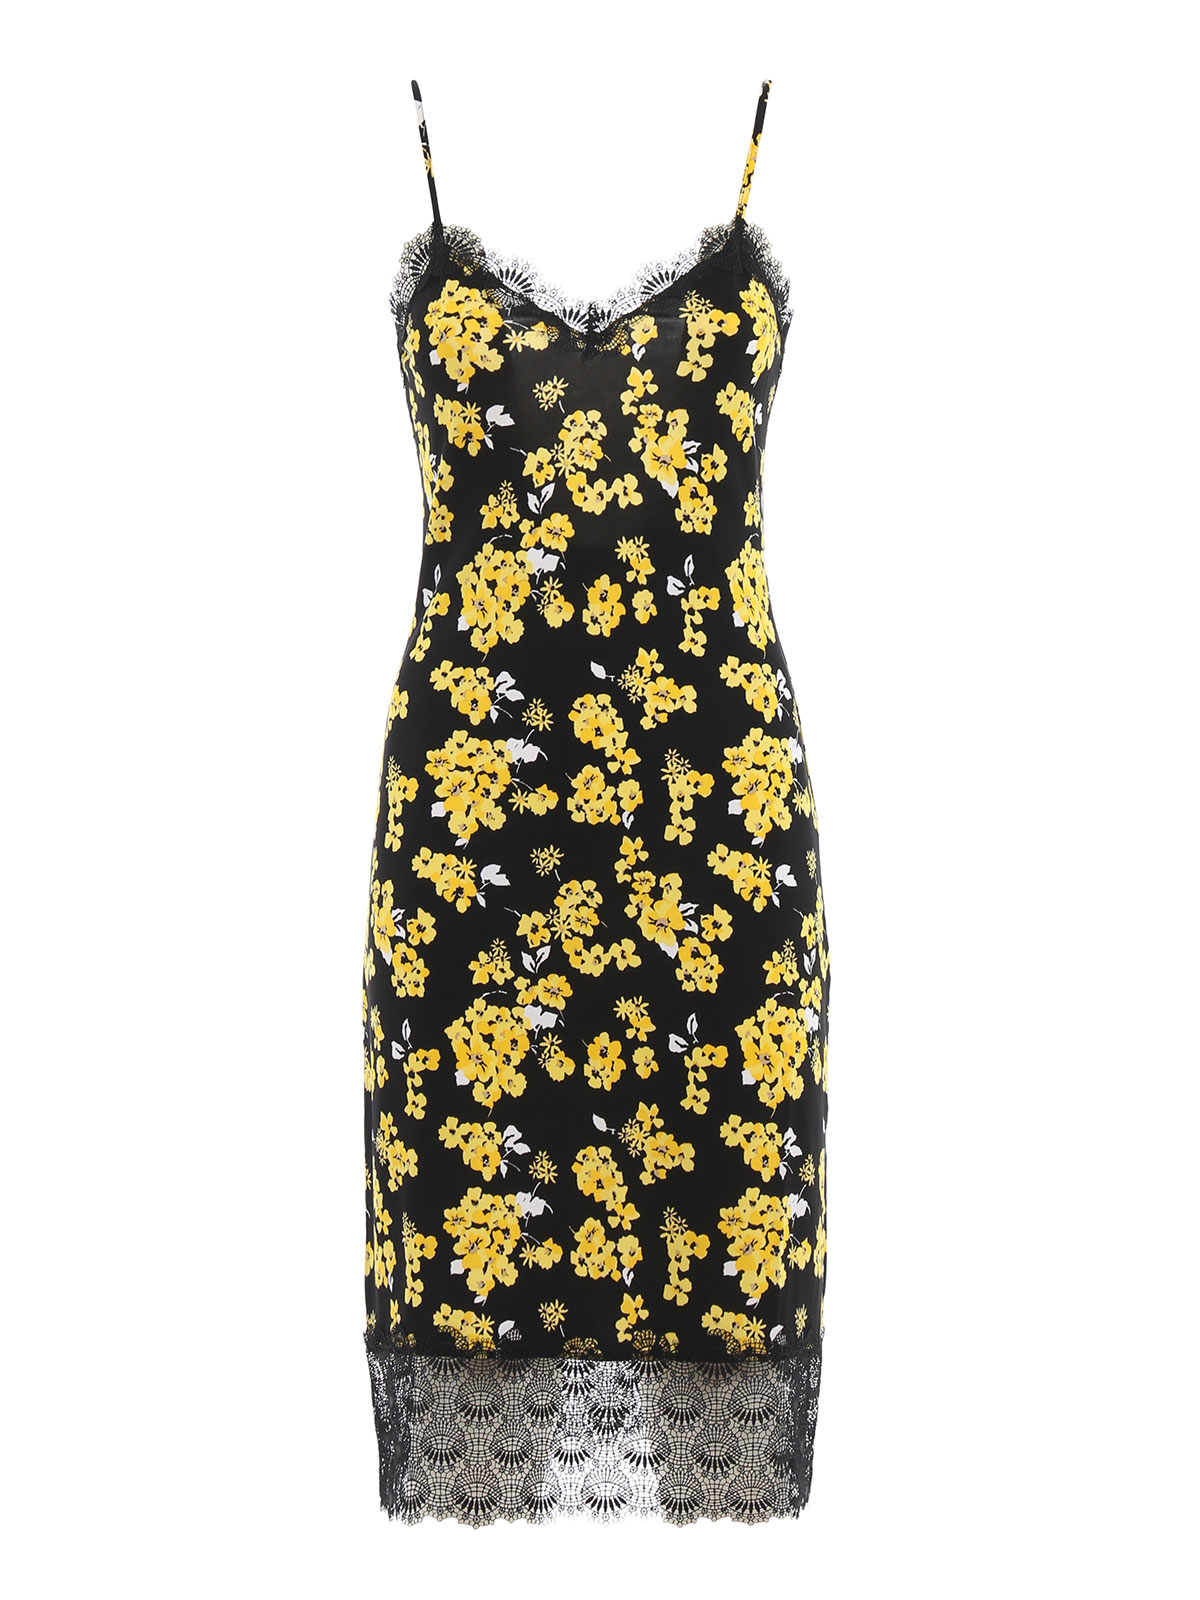 michael kors black floral dress